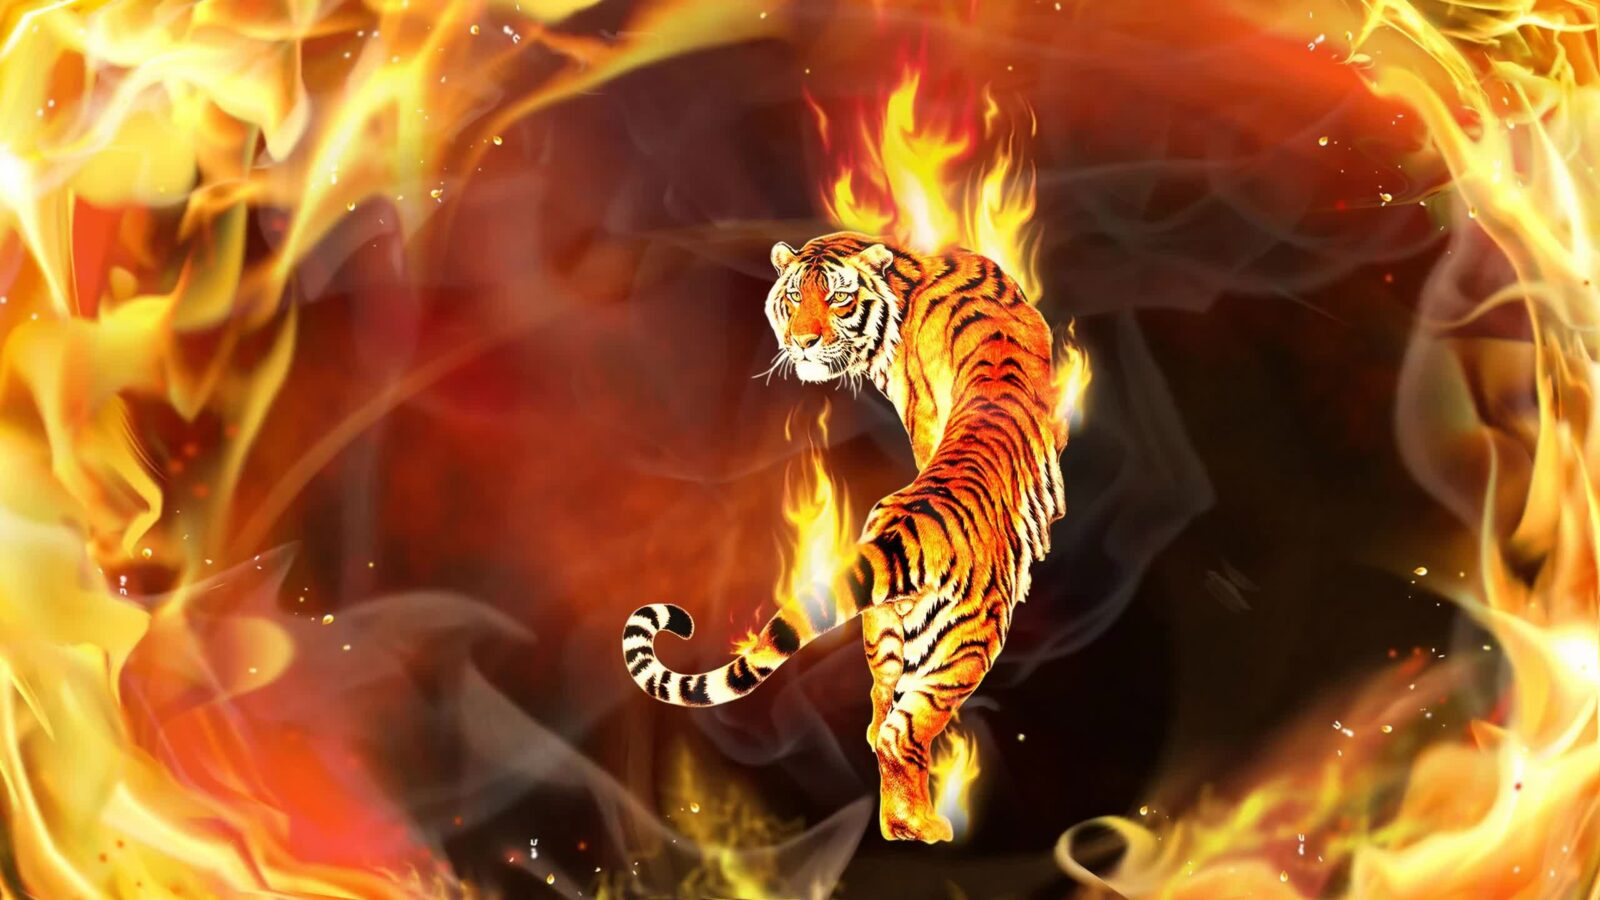 Tiger In Flames Digital Art 2K Quality – Free Live Wallpaper